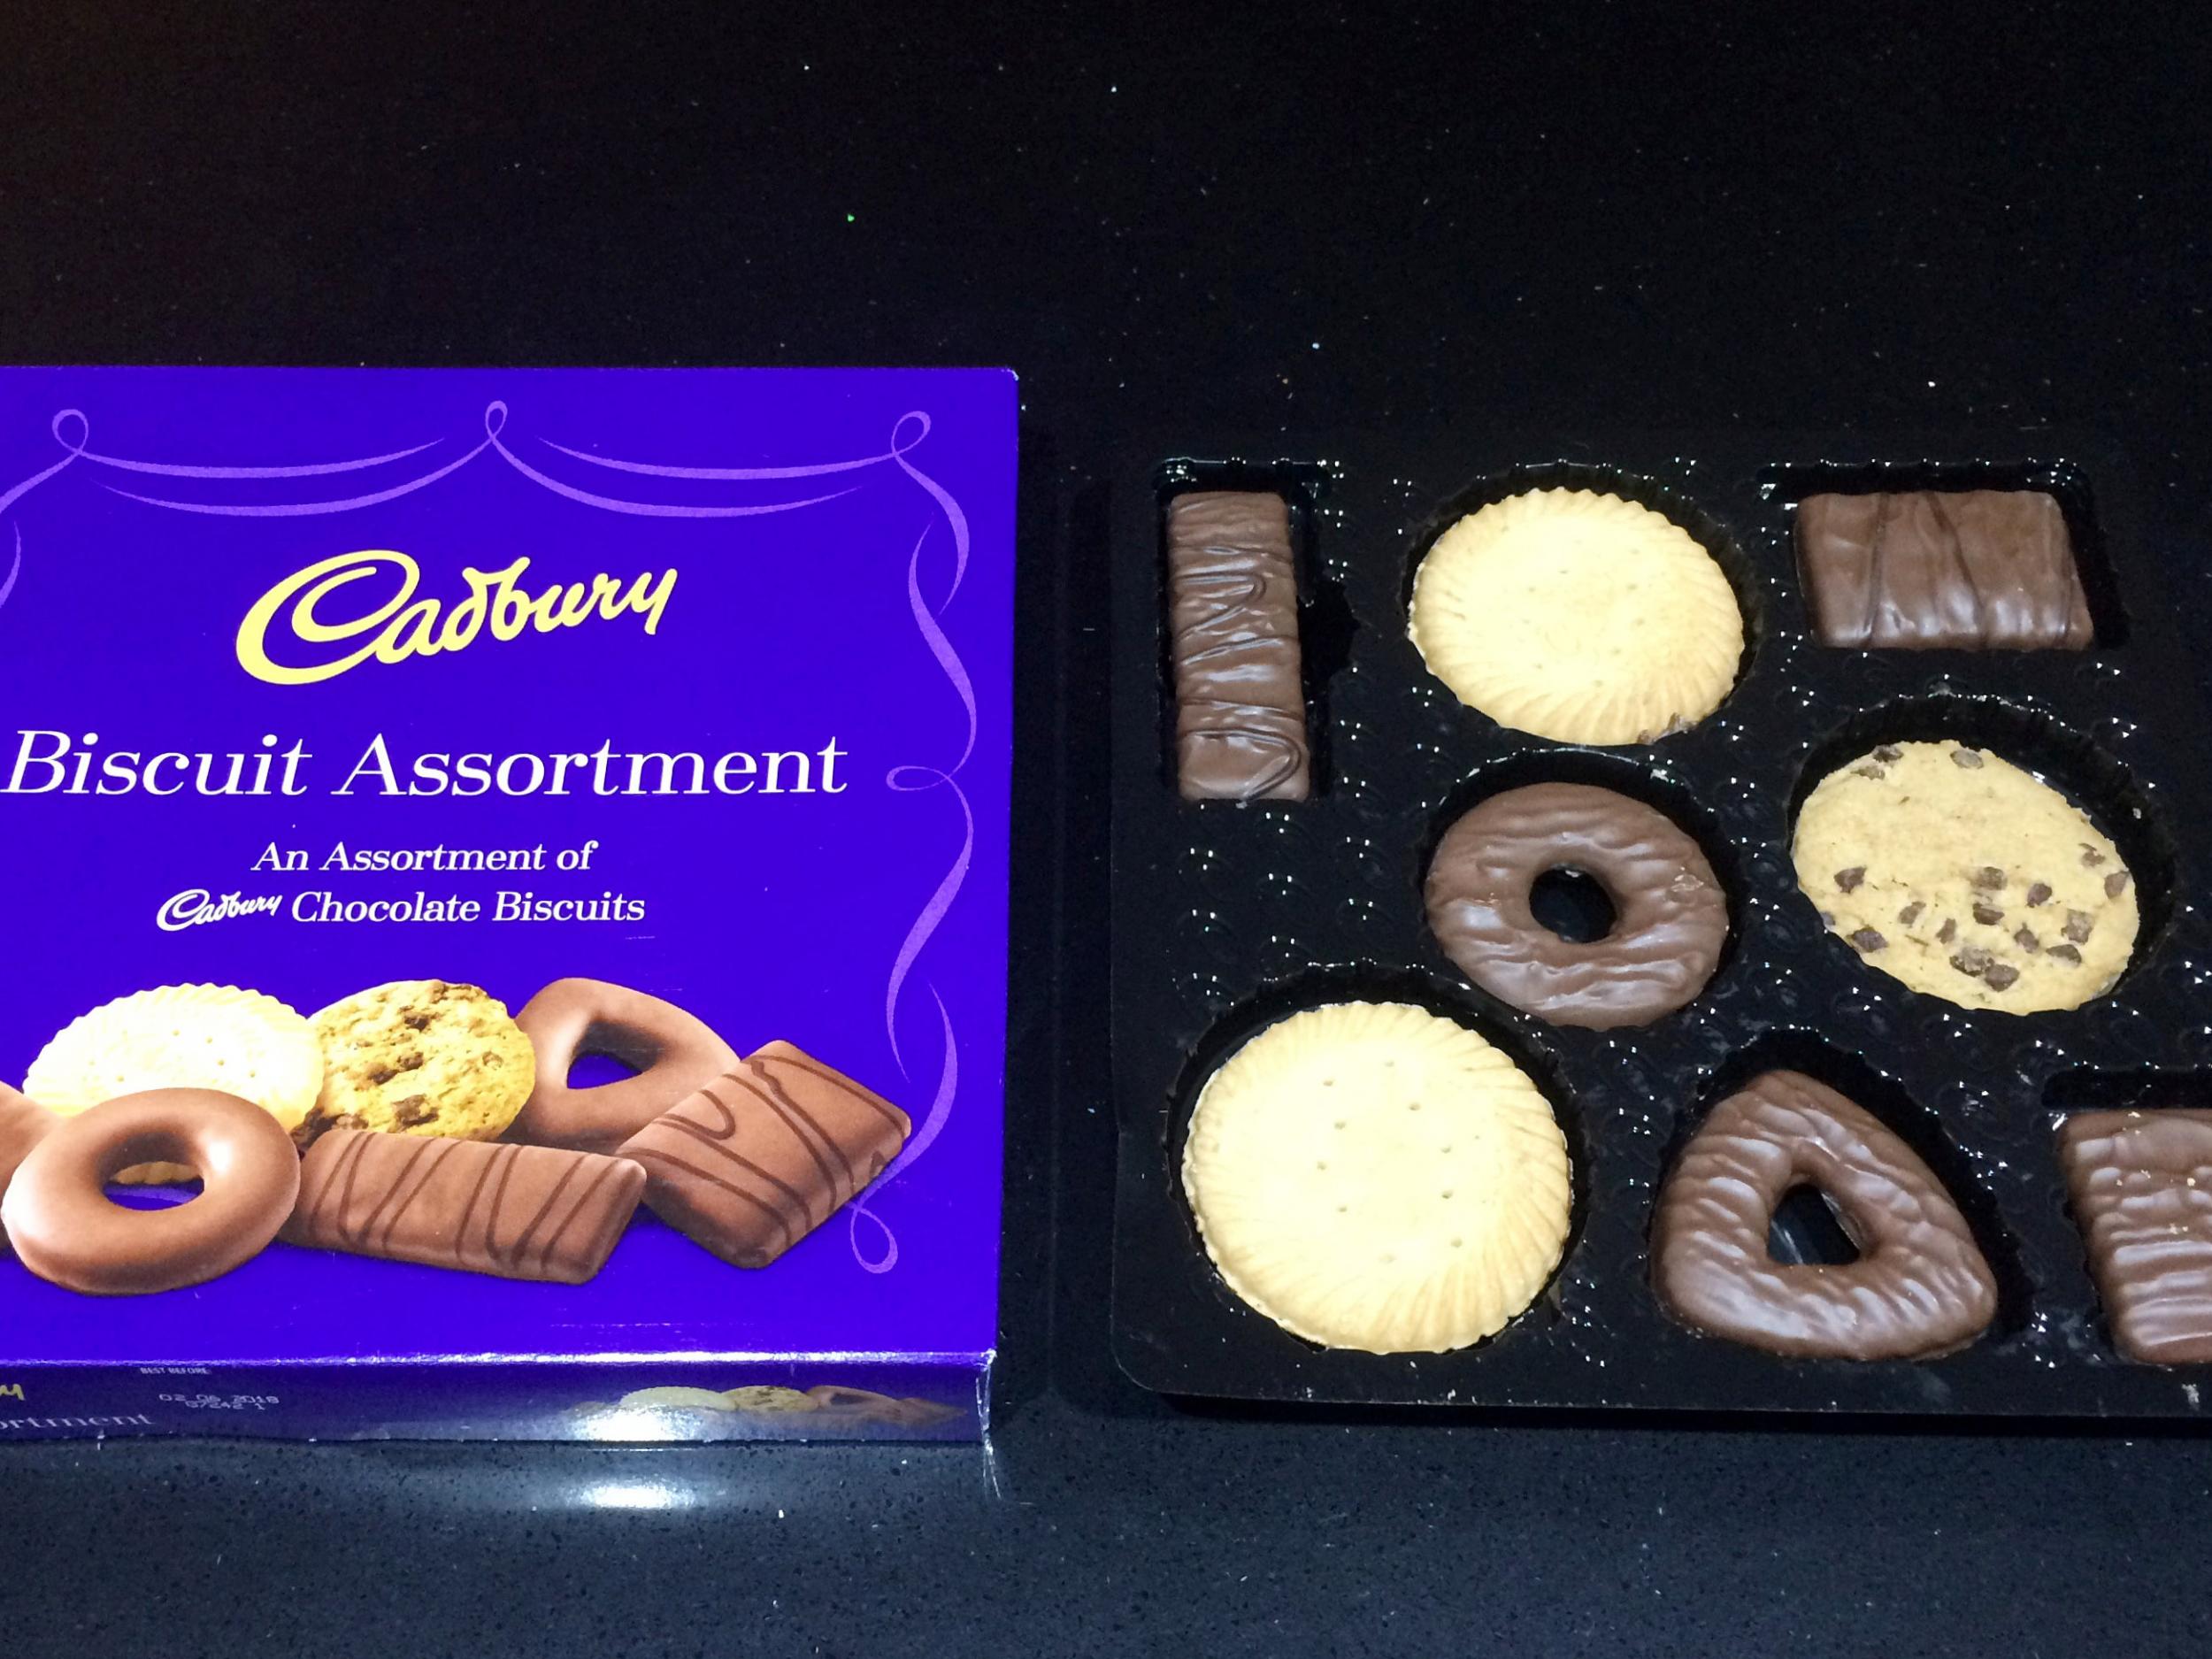 The offending Cadbury Biscuit Assortment box